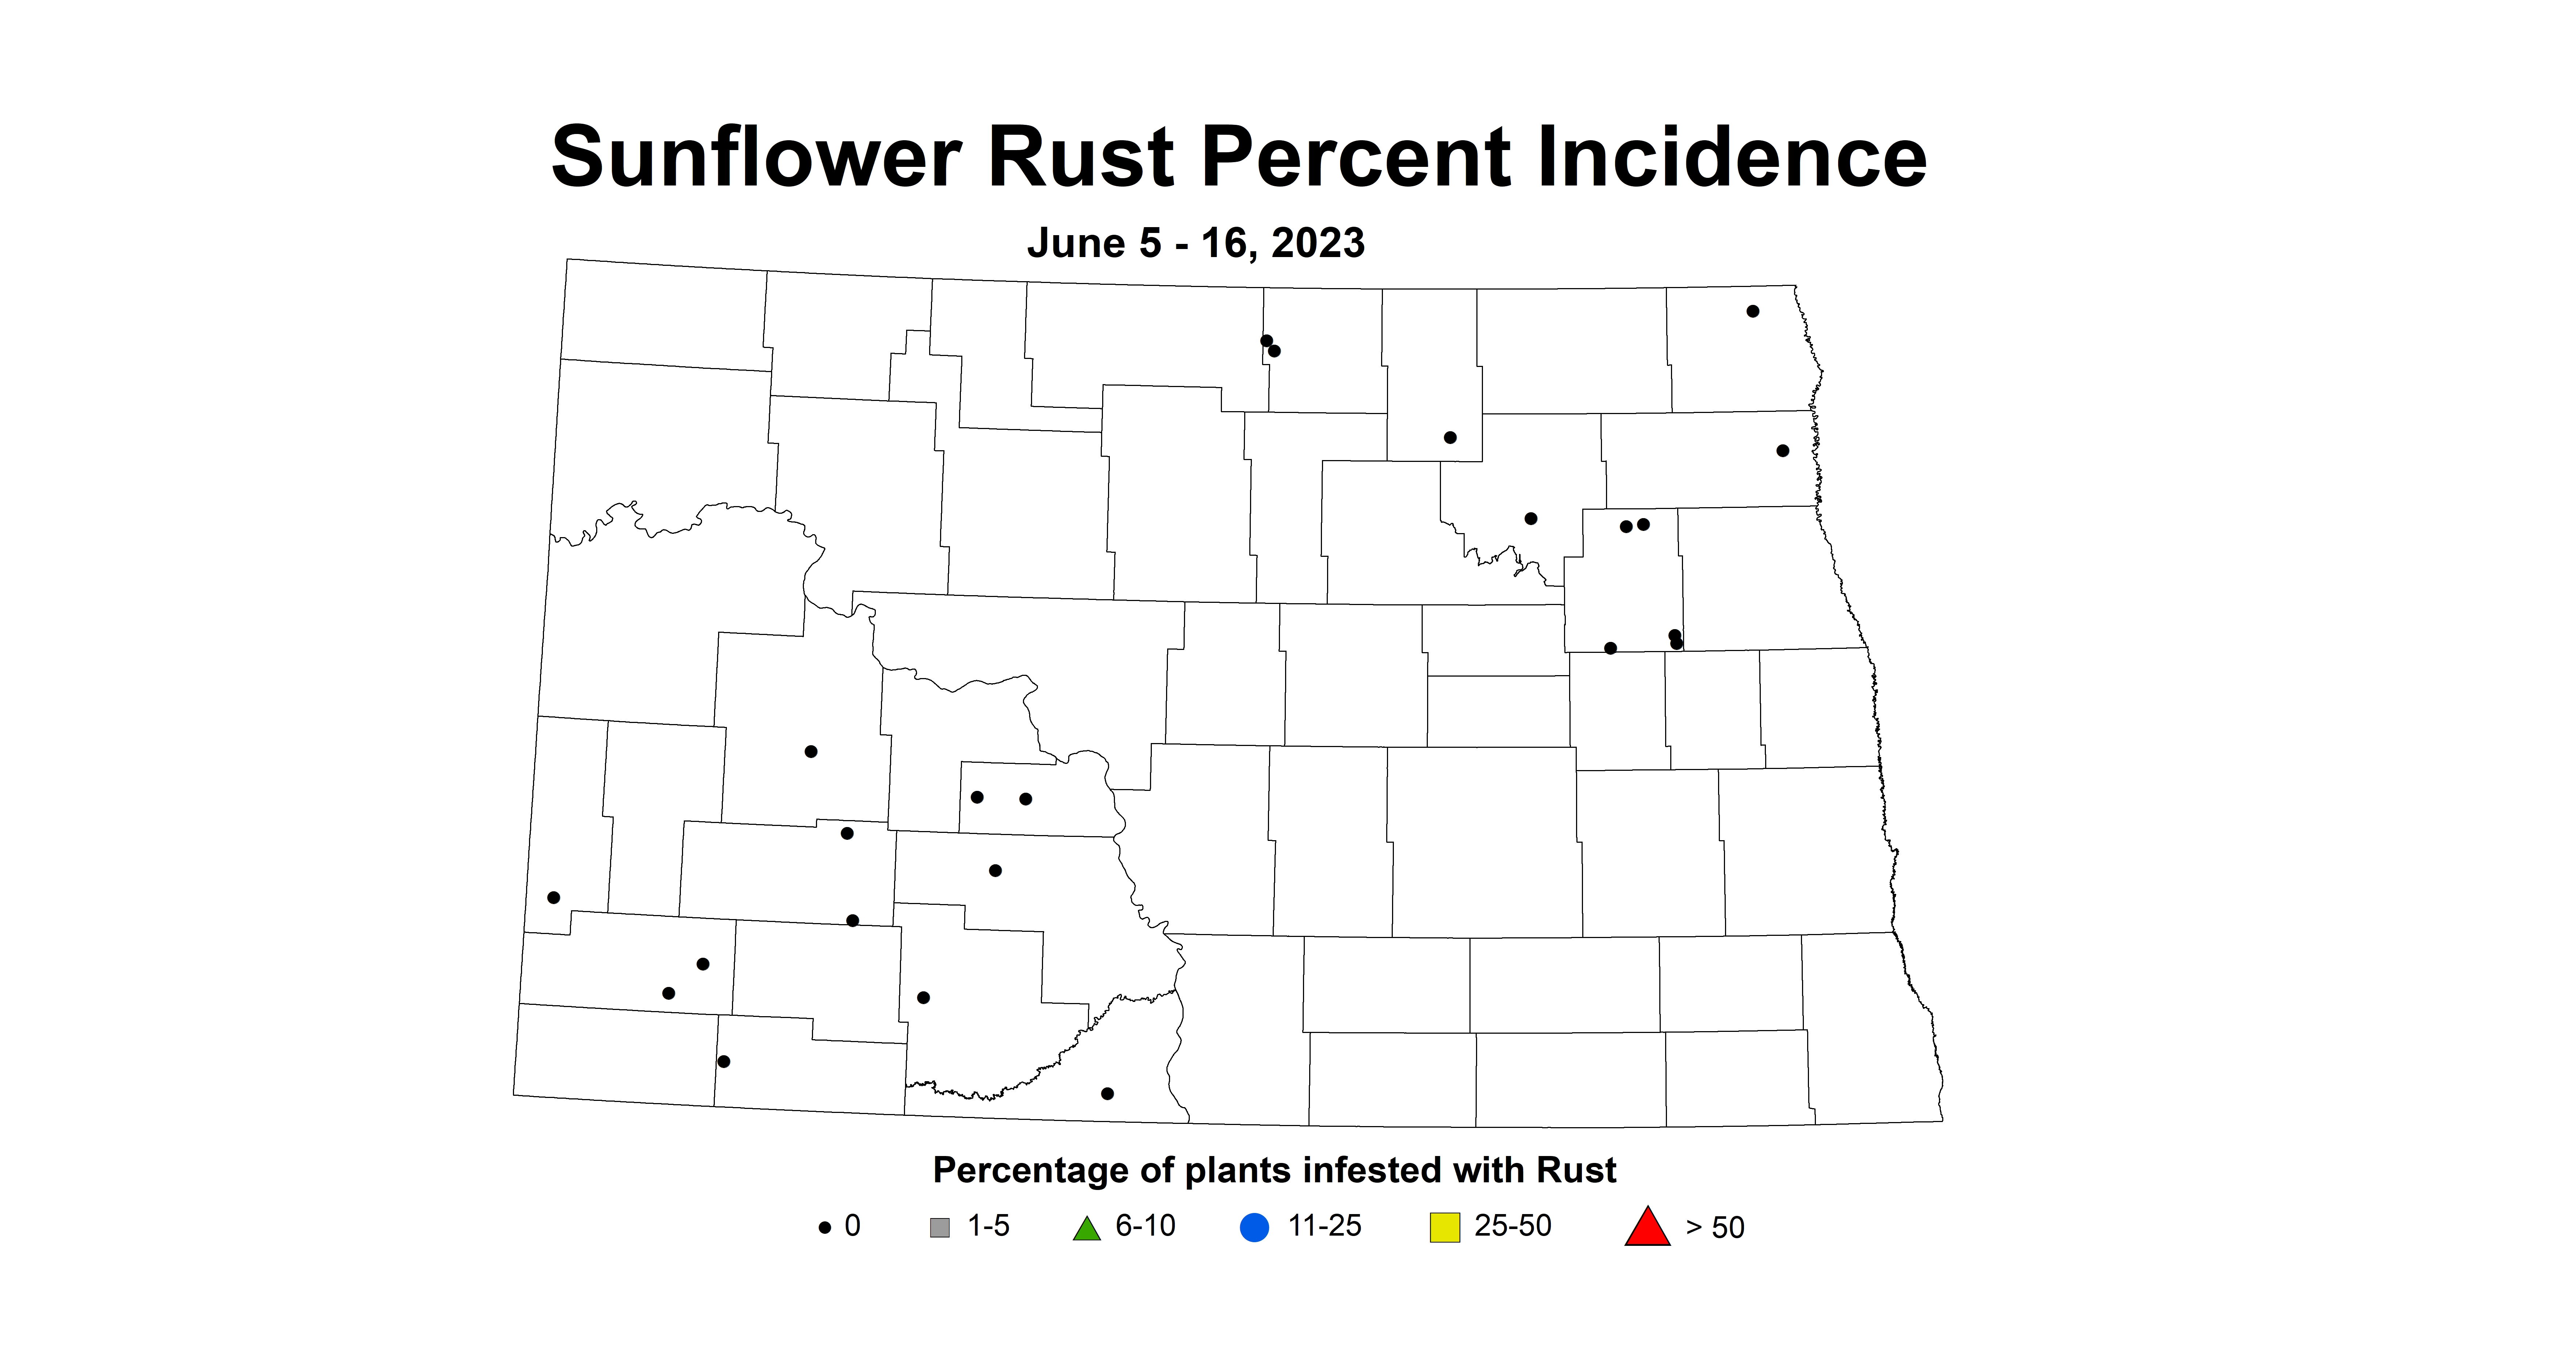 sunflower rust incidence June 5-16 2023